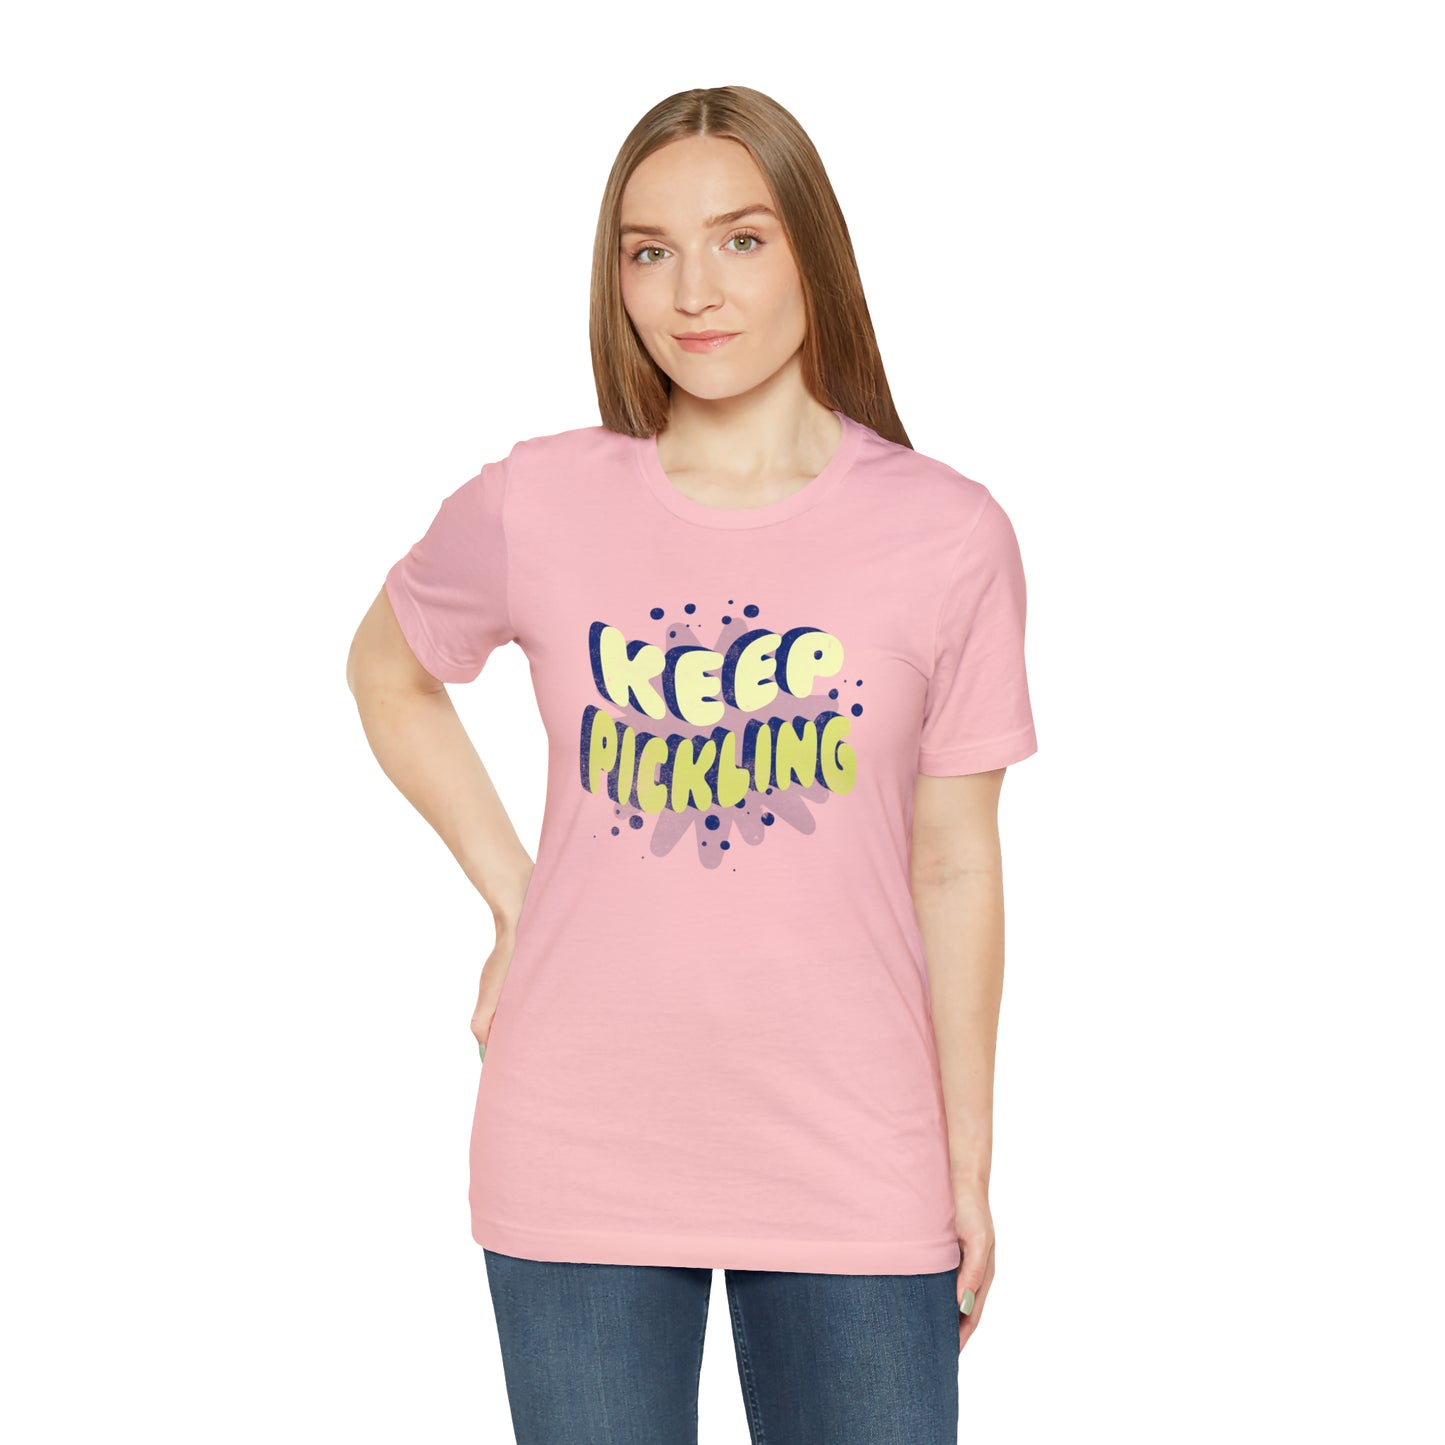 Keep Pickling - Pickleball Fun T-Shirt